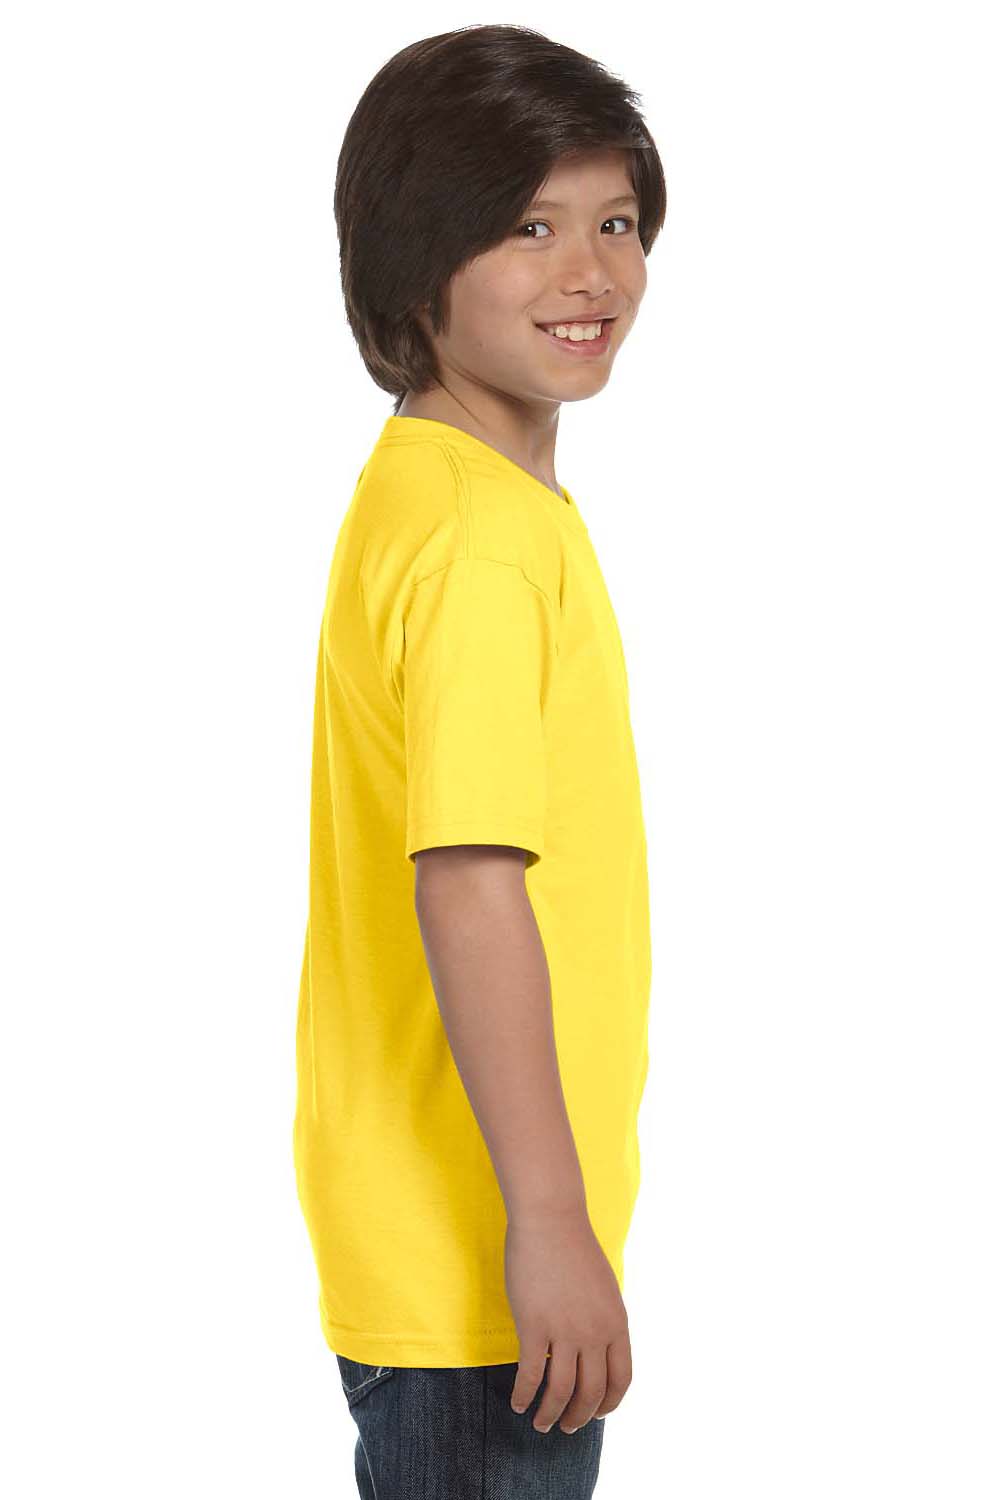 Hanes 5480 Youth ComfortSoft Short Sleeve Crewneck T-Shirt Yellow Side